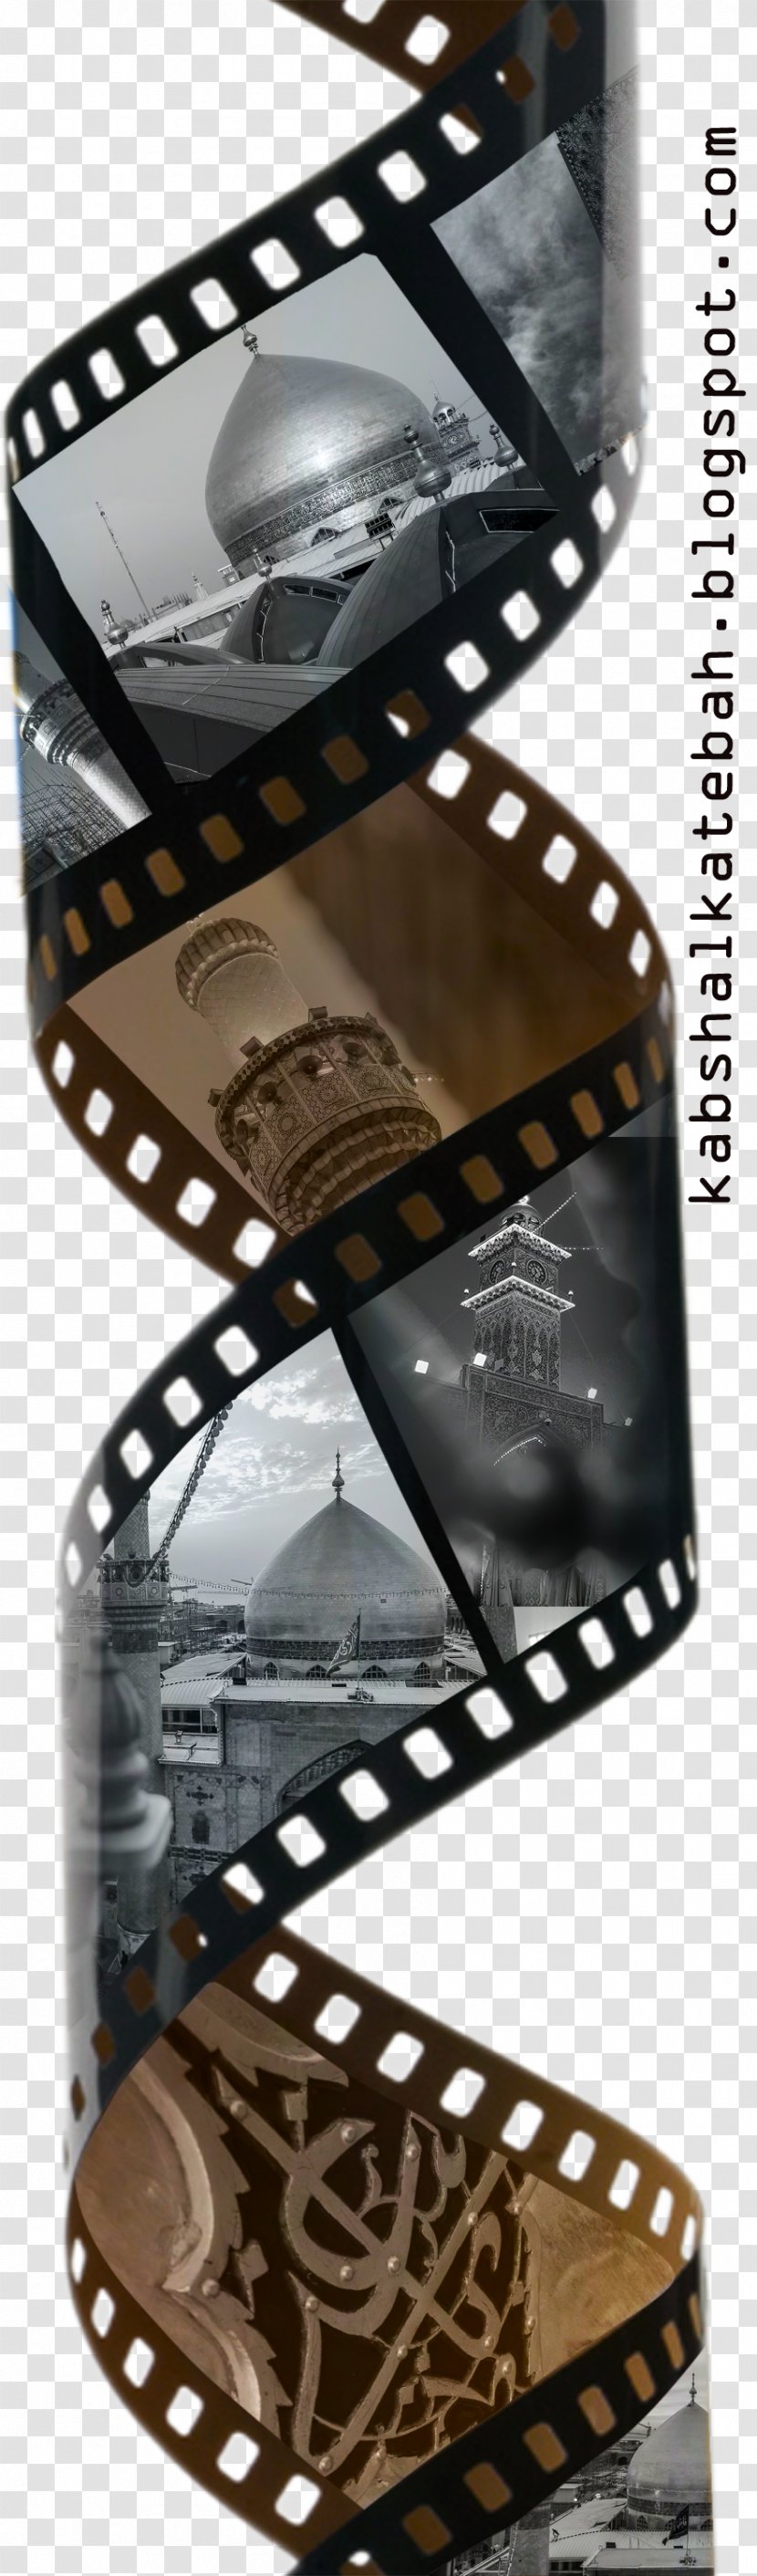 Photographic Film Stock Adobe Photoshop Image Vector Graphics - Cinematography - 4 Images 1 Mot 463 Transparent PNG